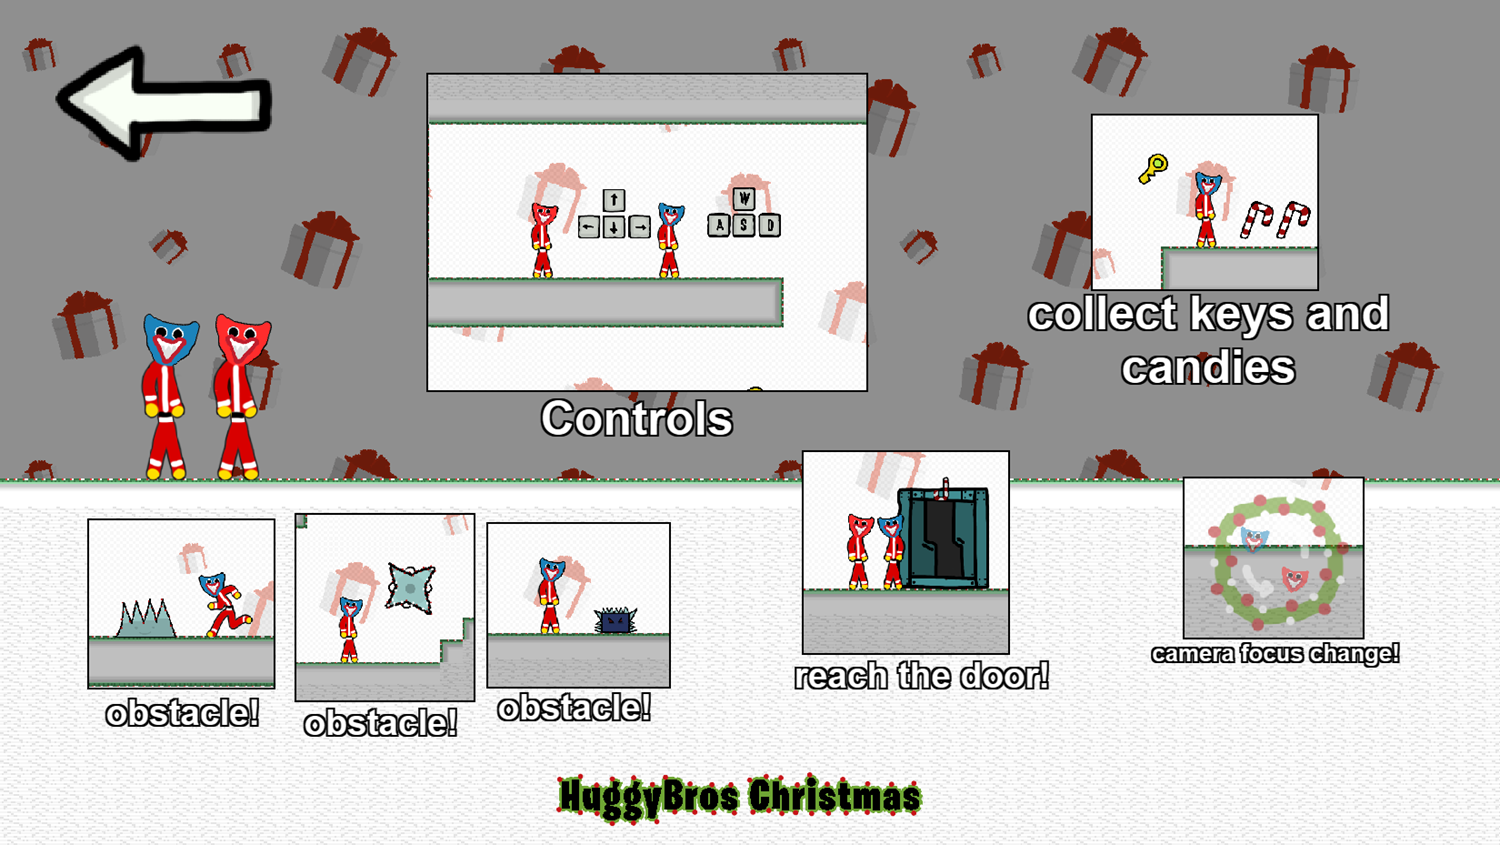 HuggyBros Christmas Game How to Play Screen Screenshot.